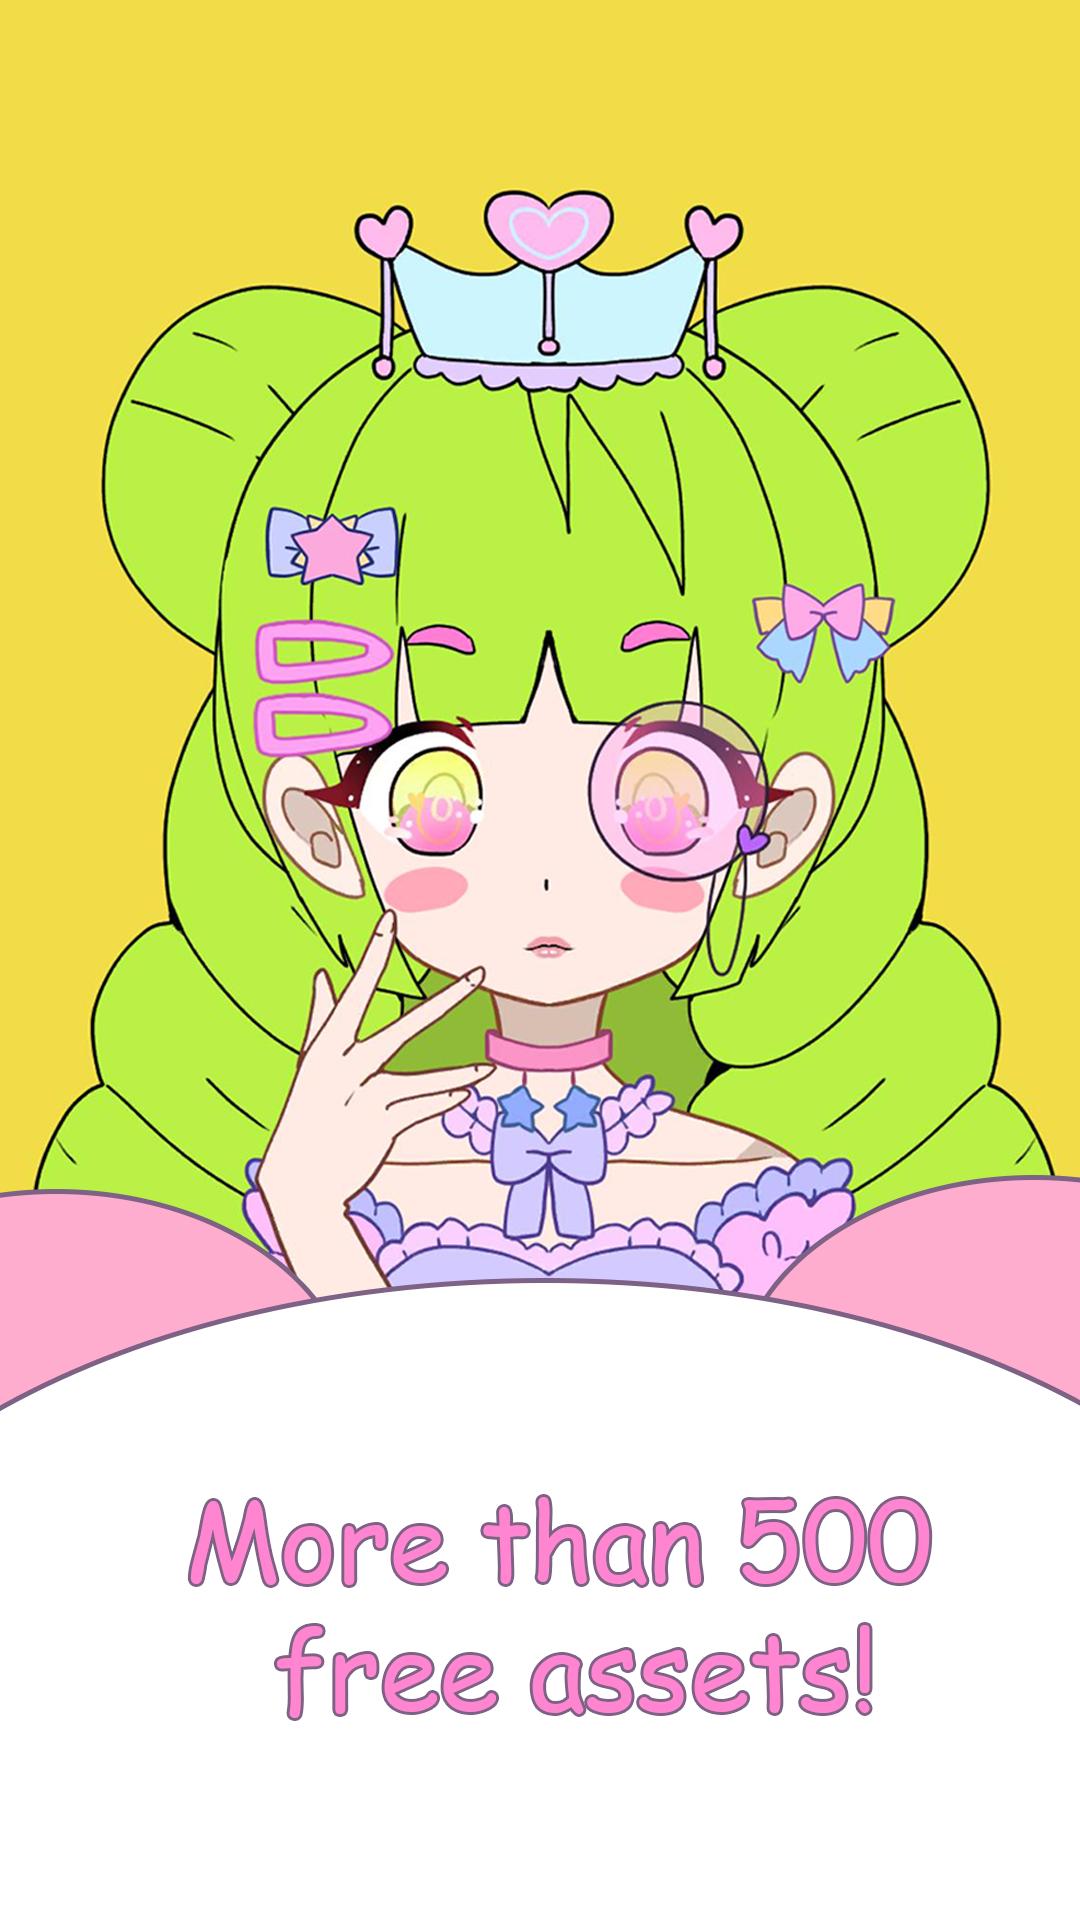 Mimistar Pastel doll chibi para Android - Download